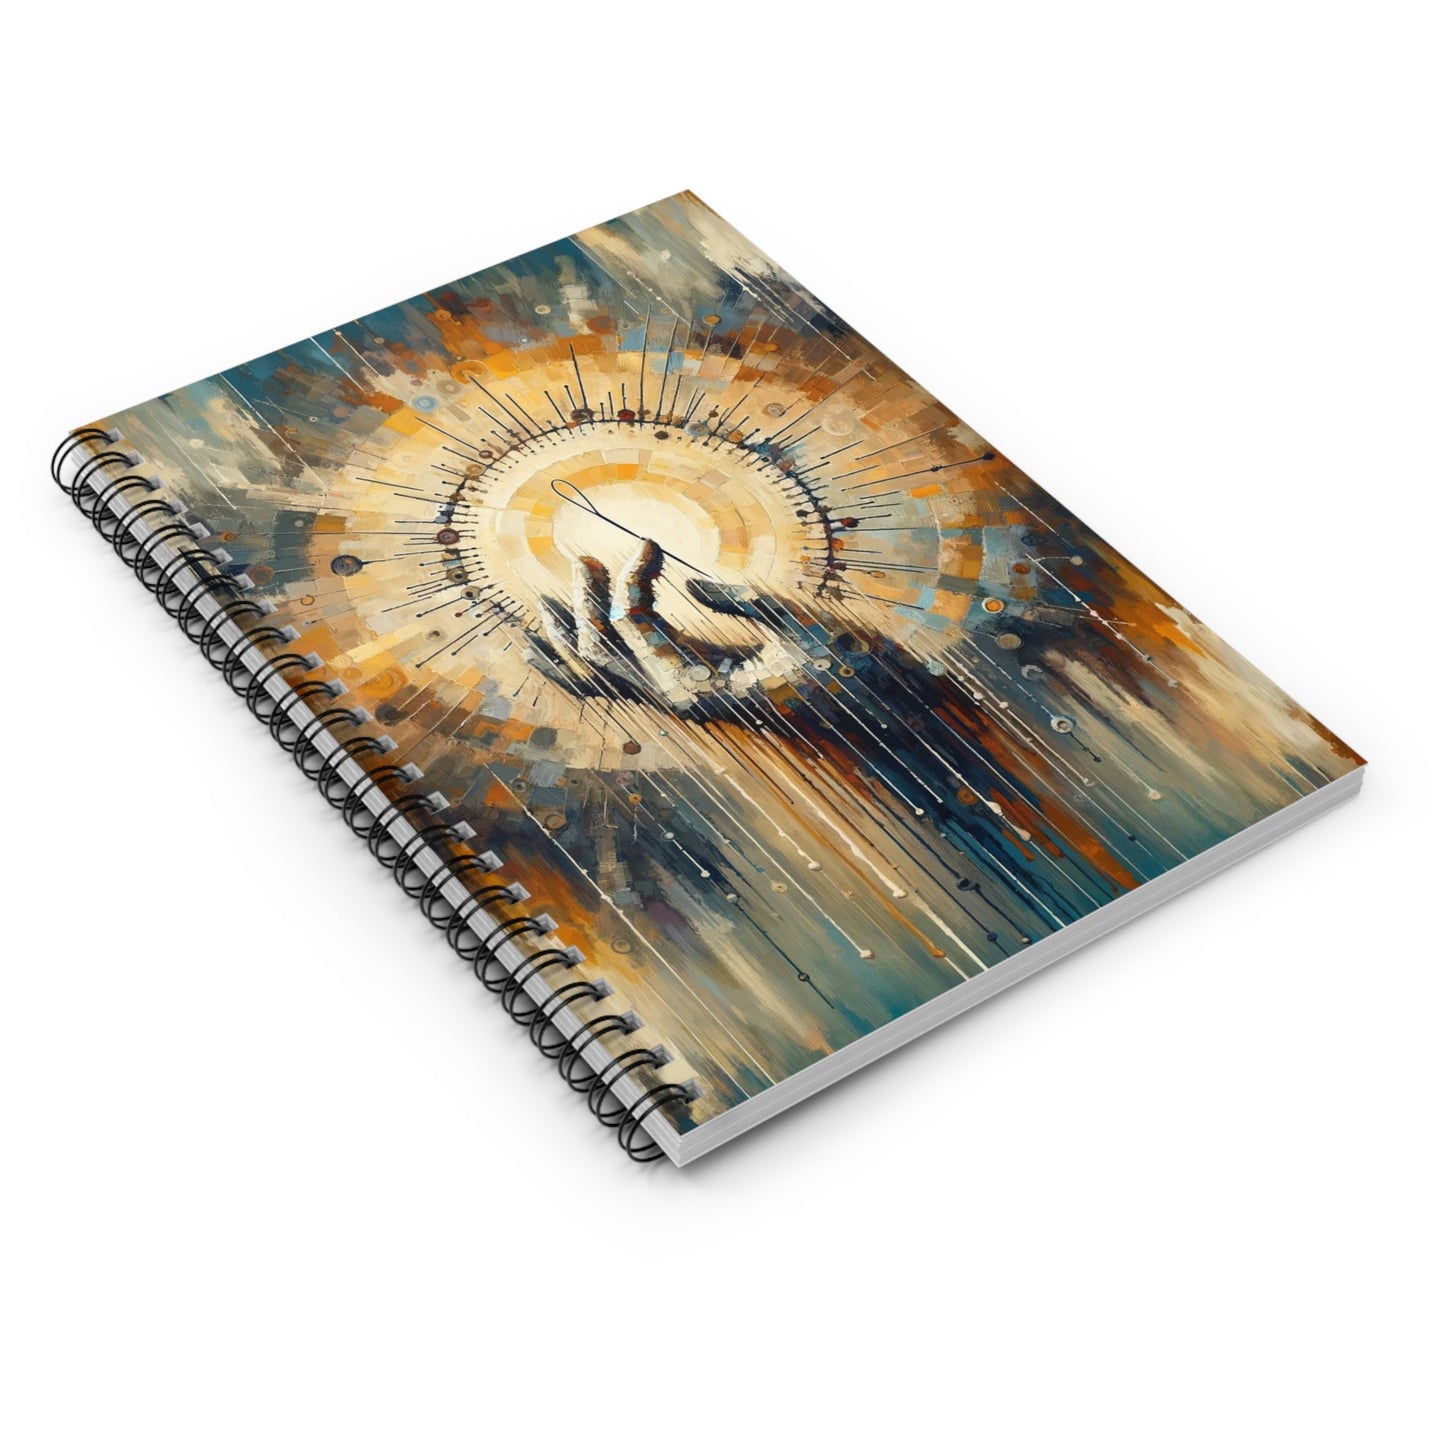 Sovereign Reflective Tachism Spiral Notebook - Ruled Line - ATUH.ART